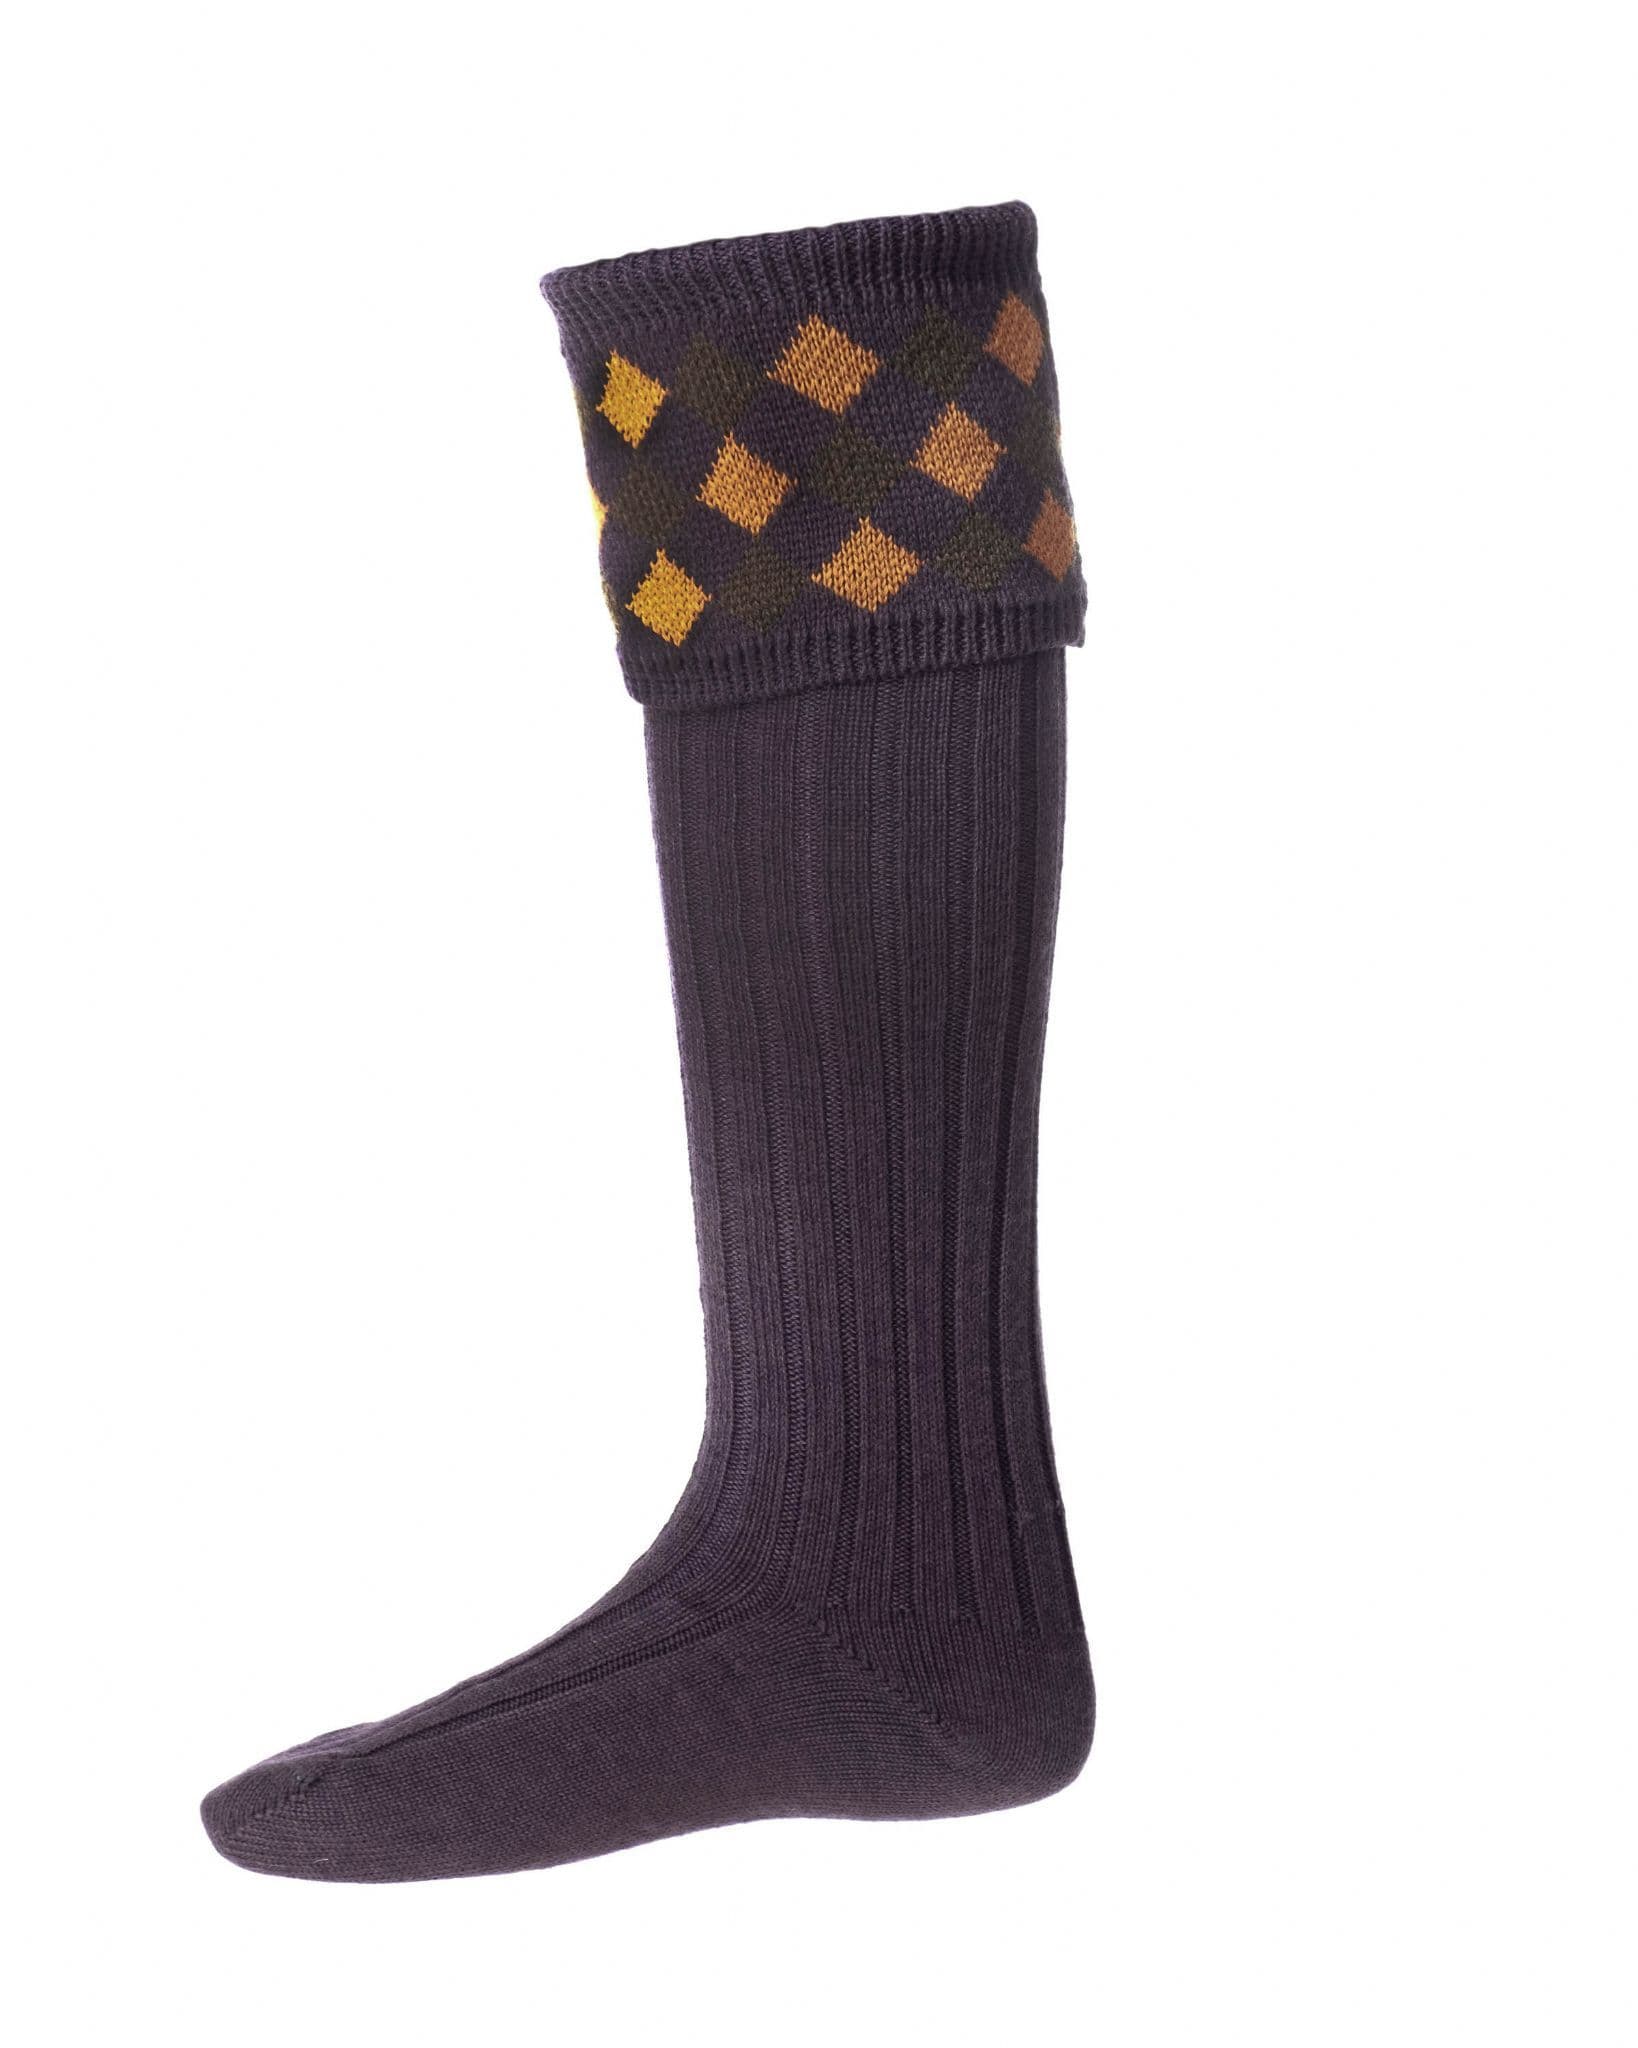 House Of Cheviot Men's Chequers Socks - Thistle